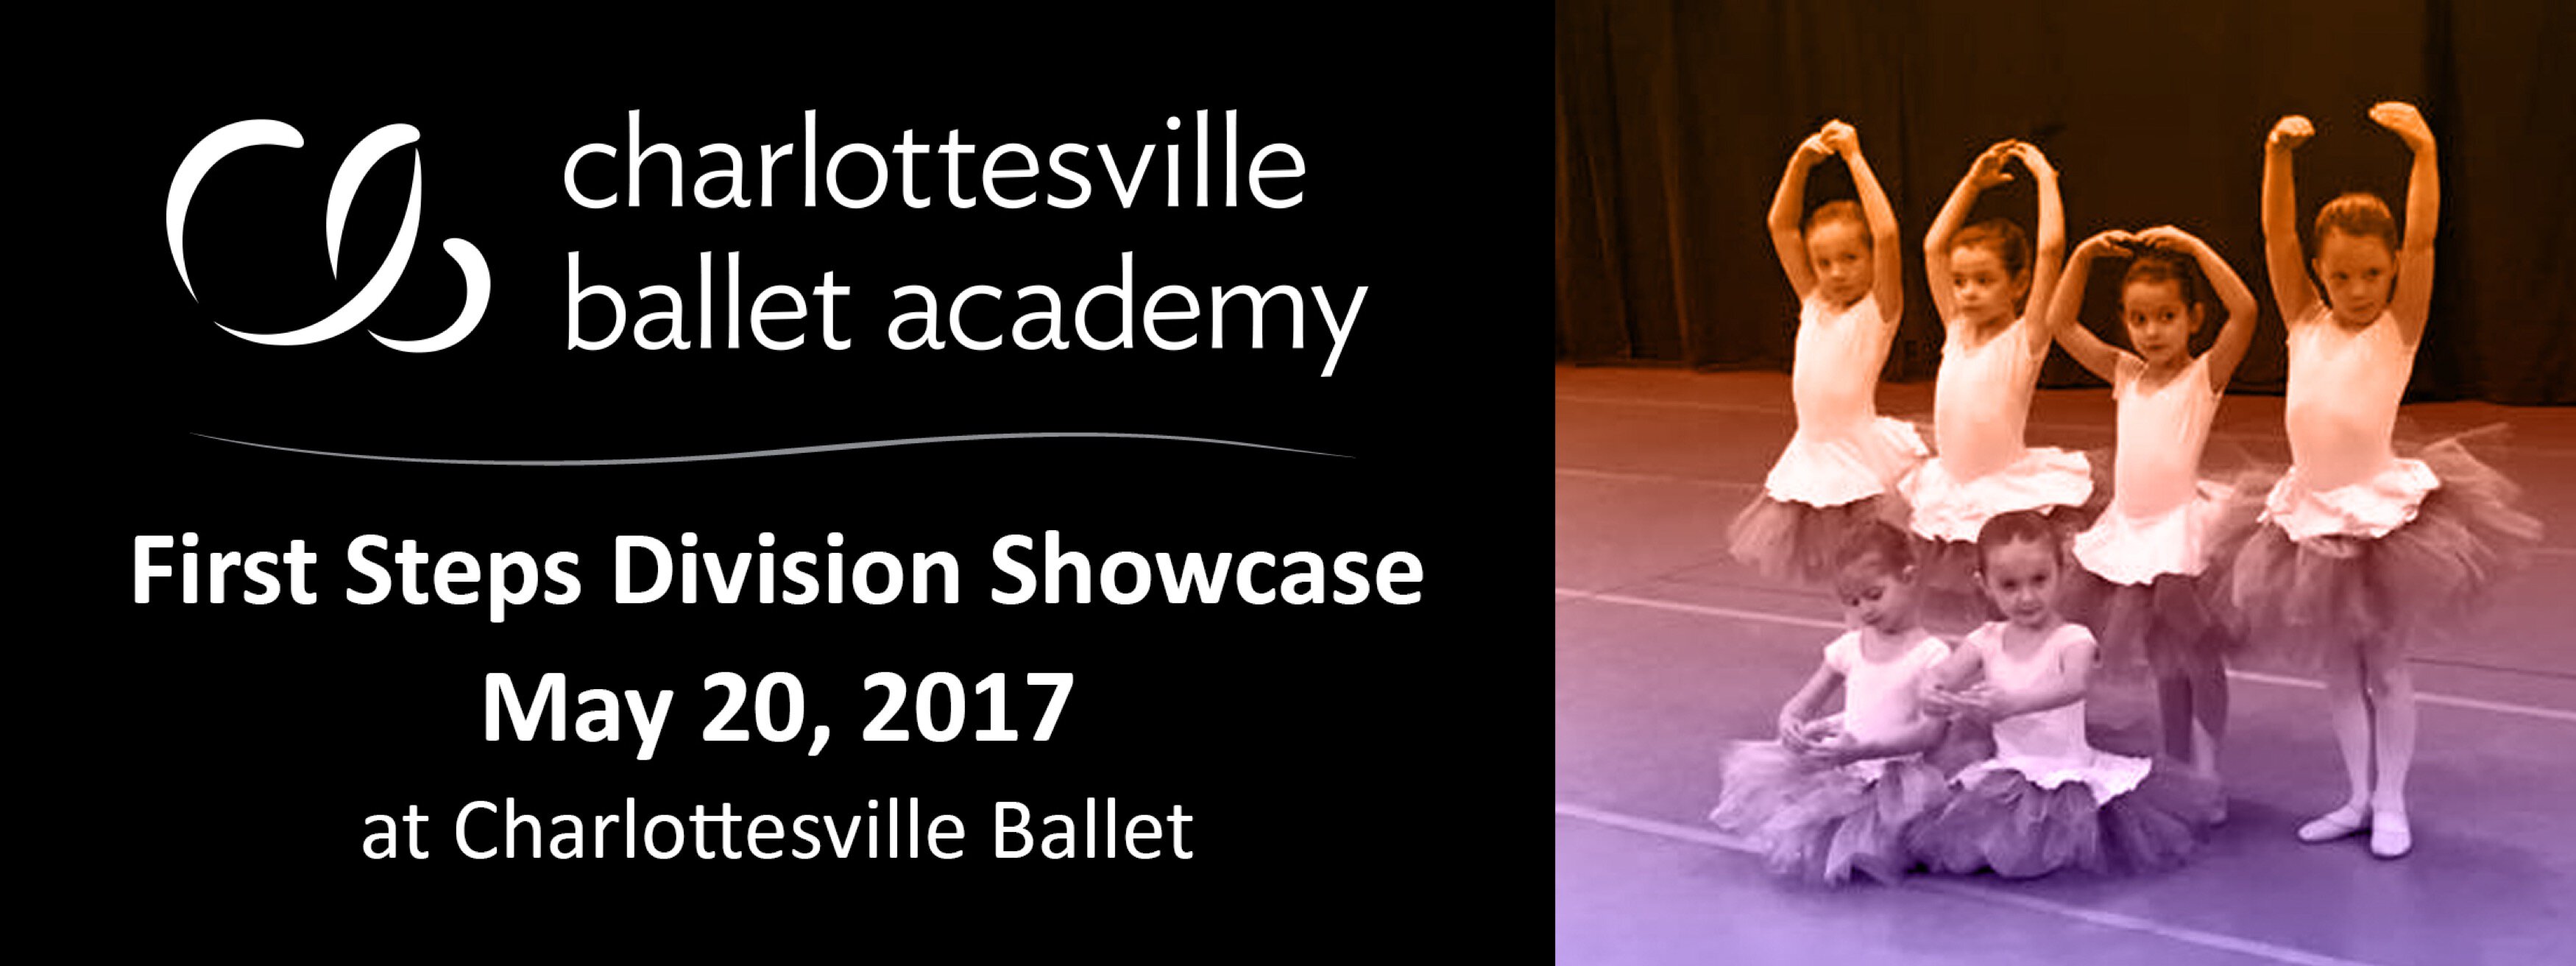 First Steps Division ShowcaseCharlottesville Ballet